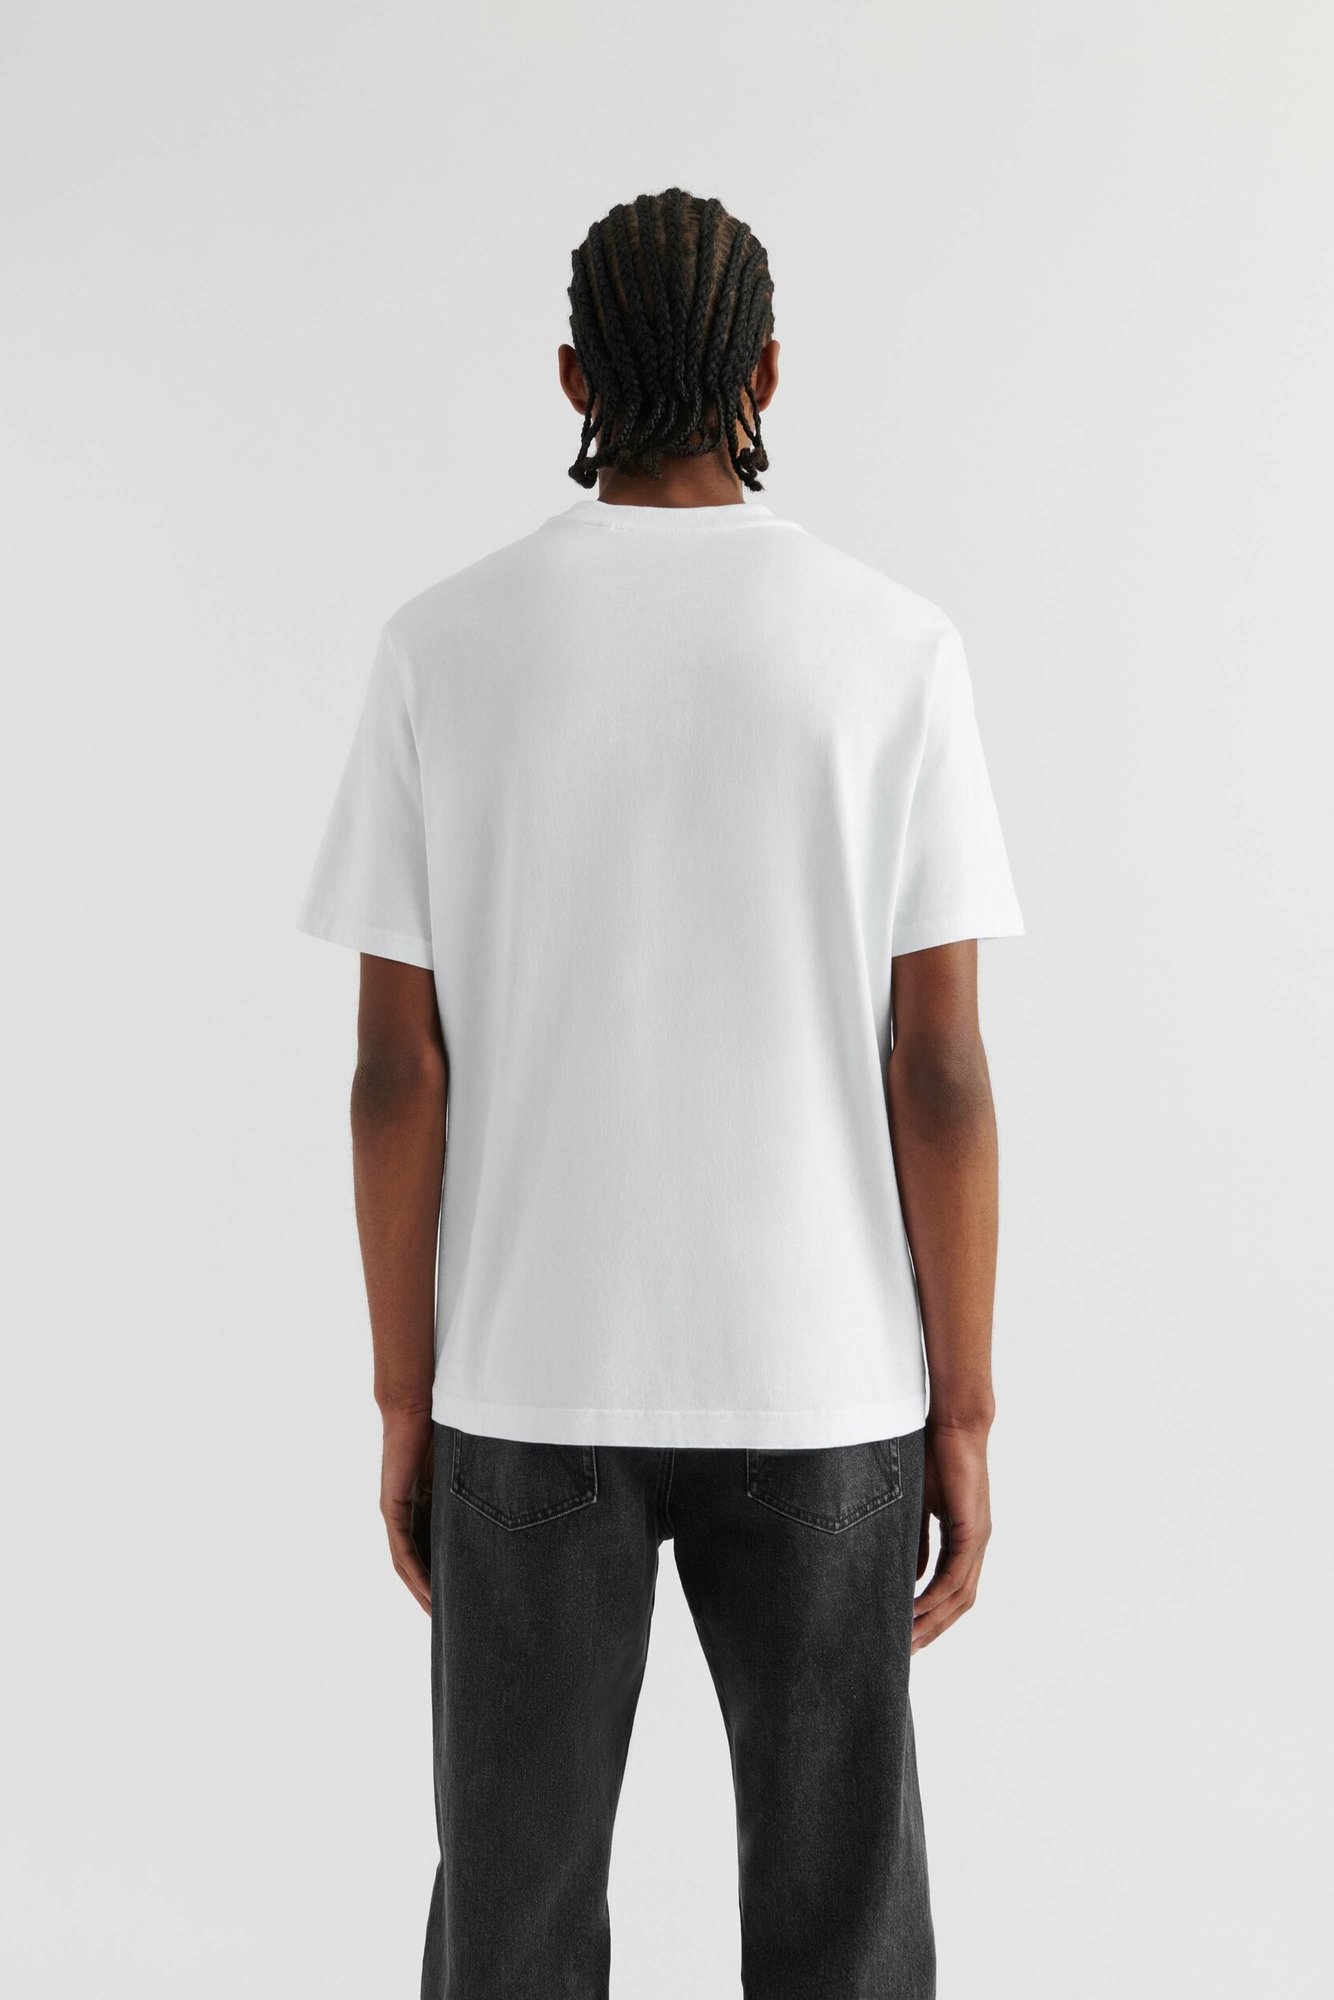 AXEL ARIGATO Signature T-Shirt in White S